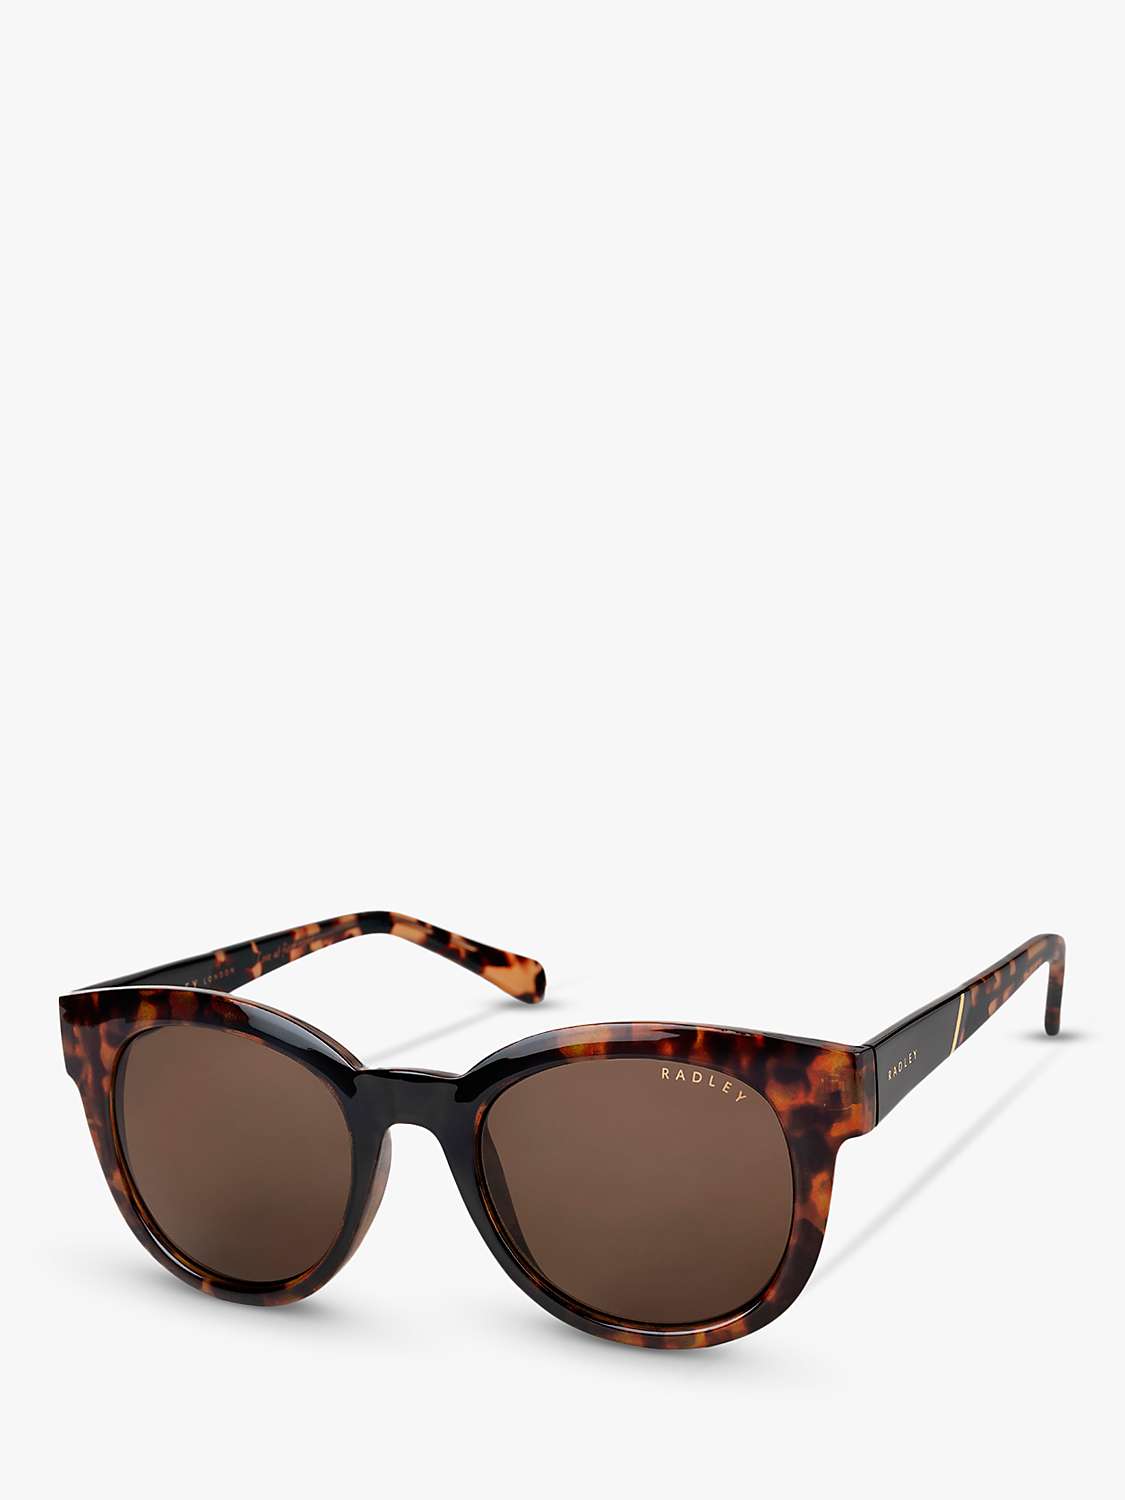 Buy Radley Women's Elspeth Chunky Cat Eye Sunglasses Online at johnlewis.com